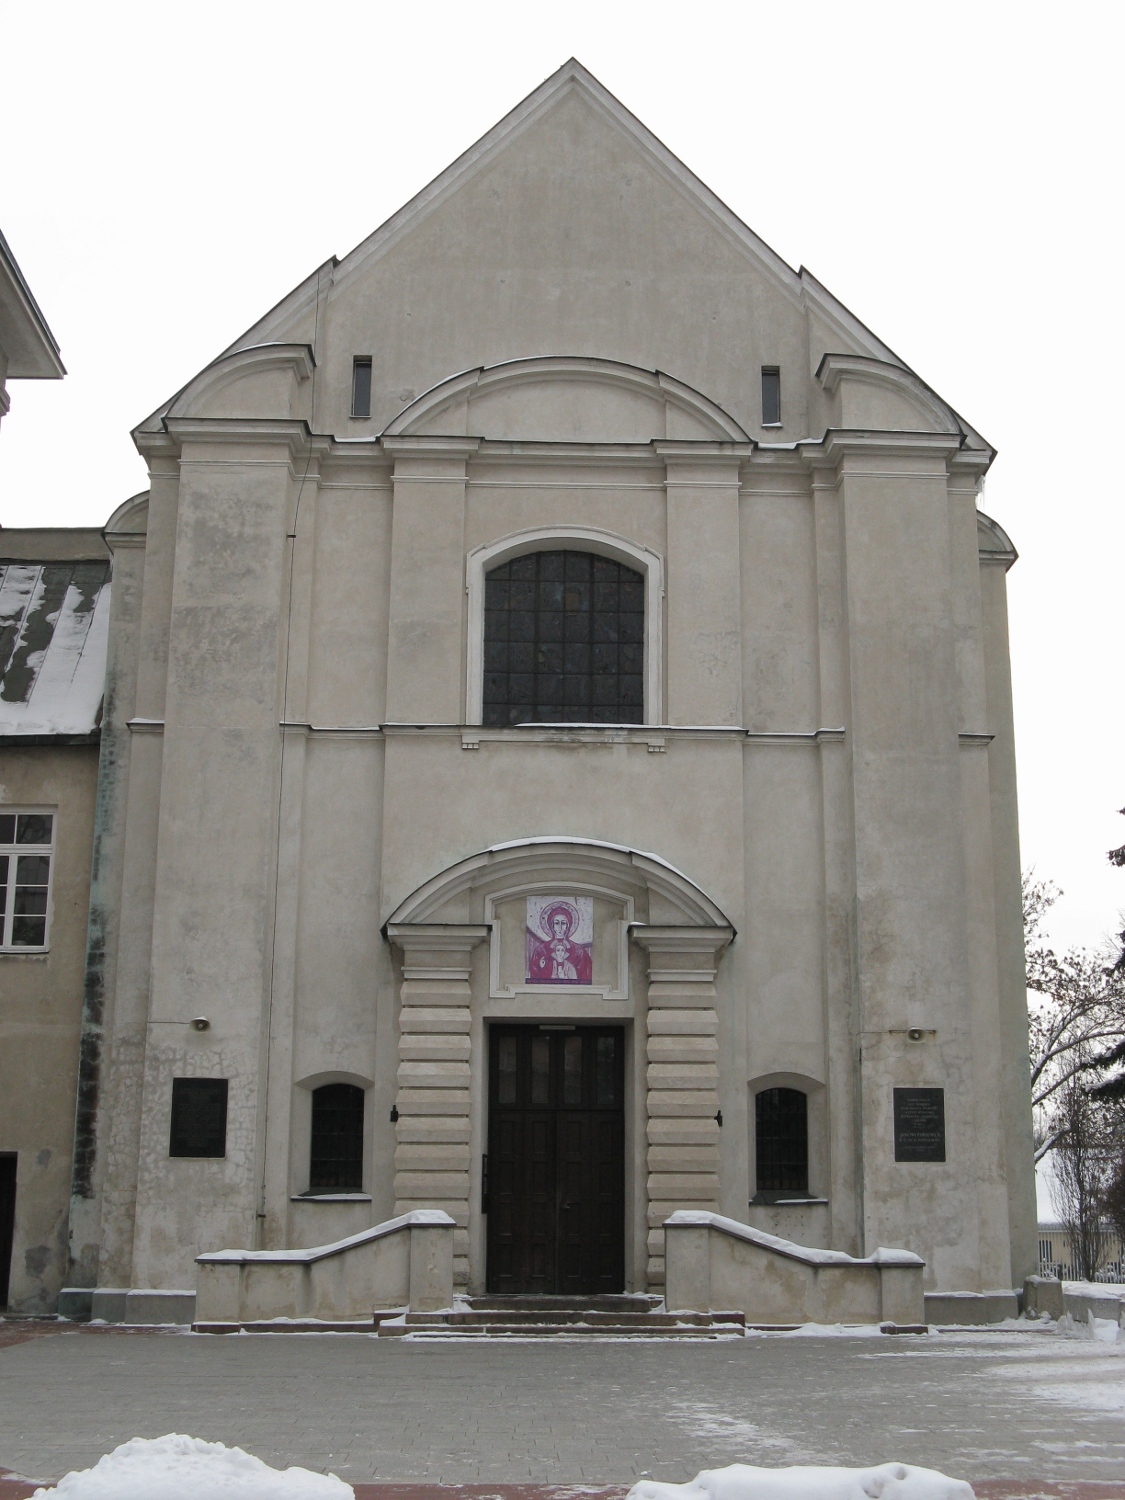 Church of the Holy Cross - the facade